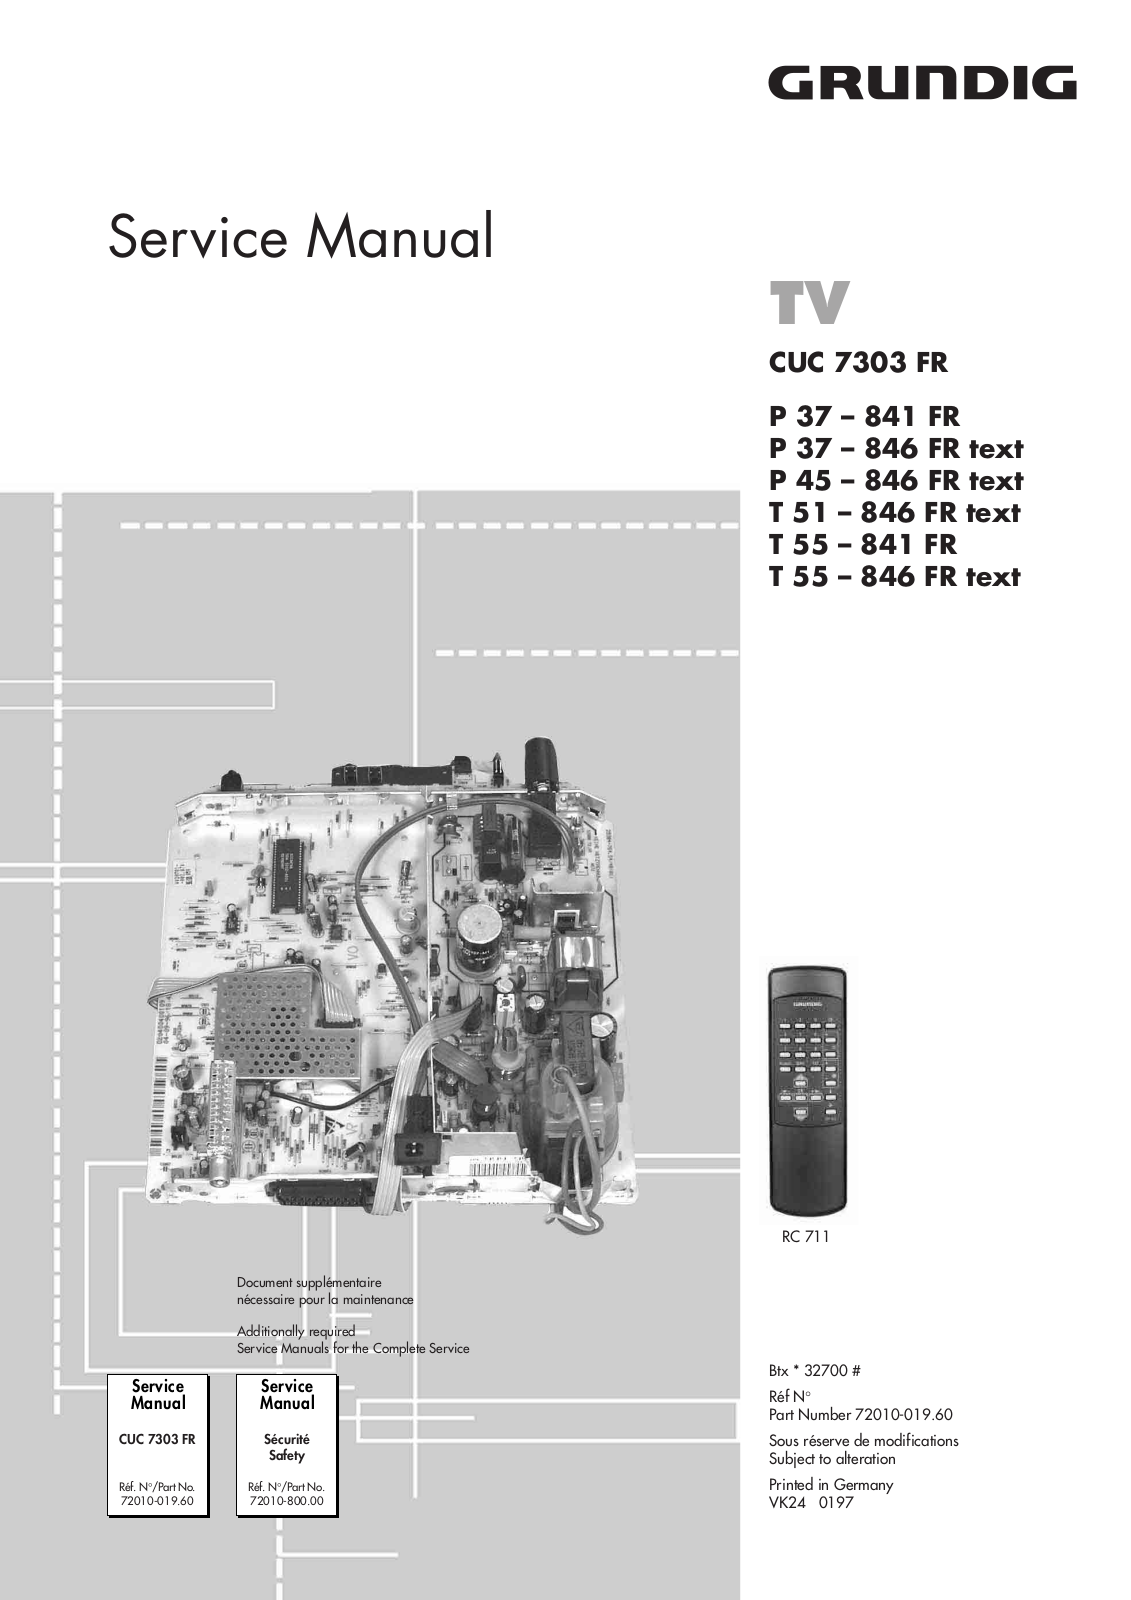 Grundig T 55 – 846 FR, T 55 – 841 FR, T 51 – 846 FR, P 45 – 846 FR, P 37 – 846 FR Service Manual